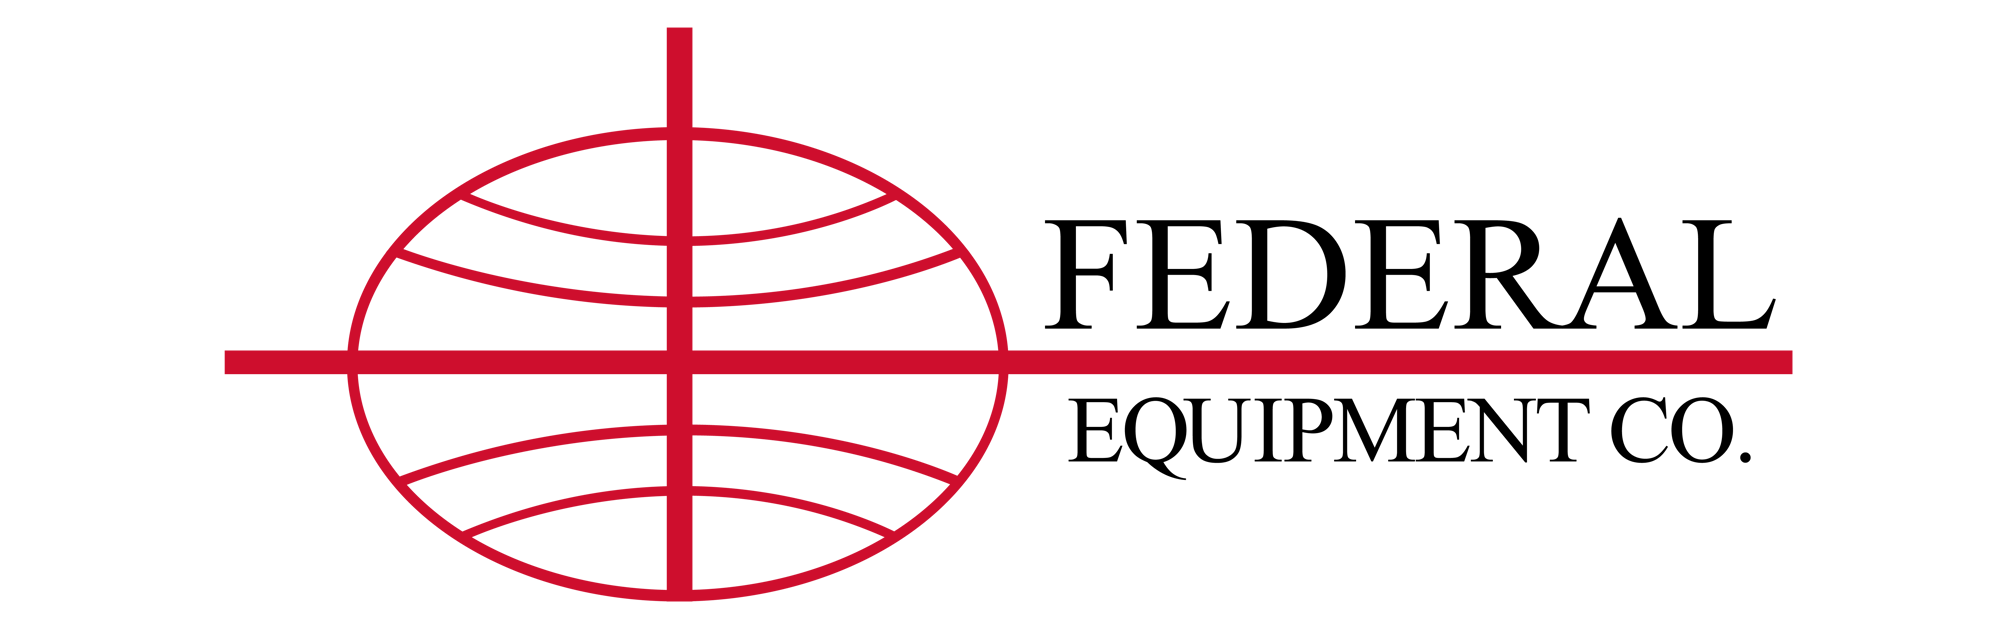 société-équipement-fédéral-logo-final